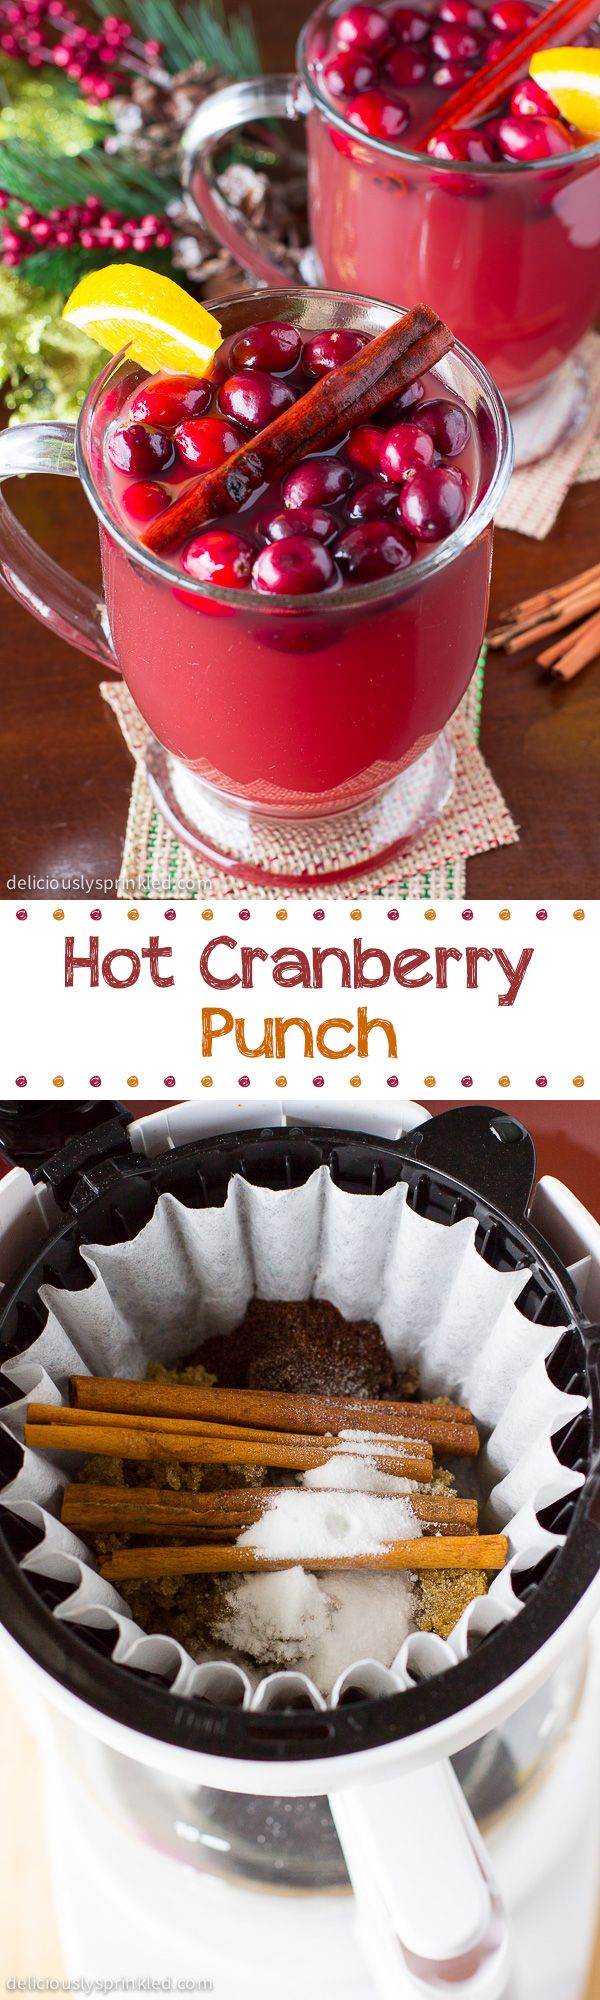 hot cranberry punch